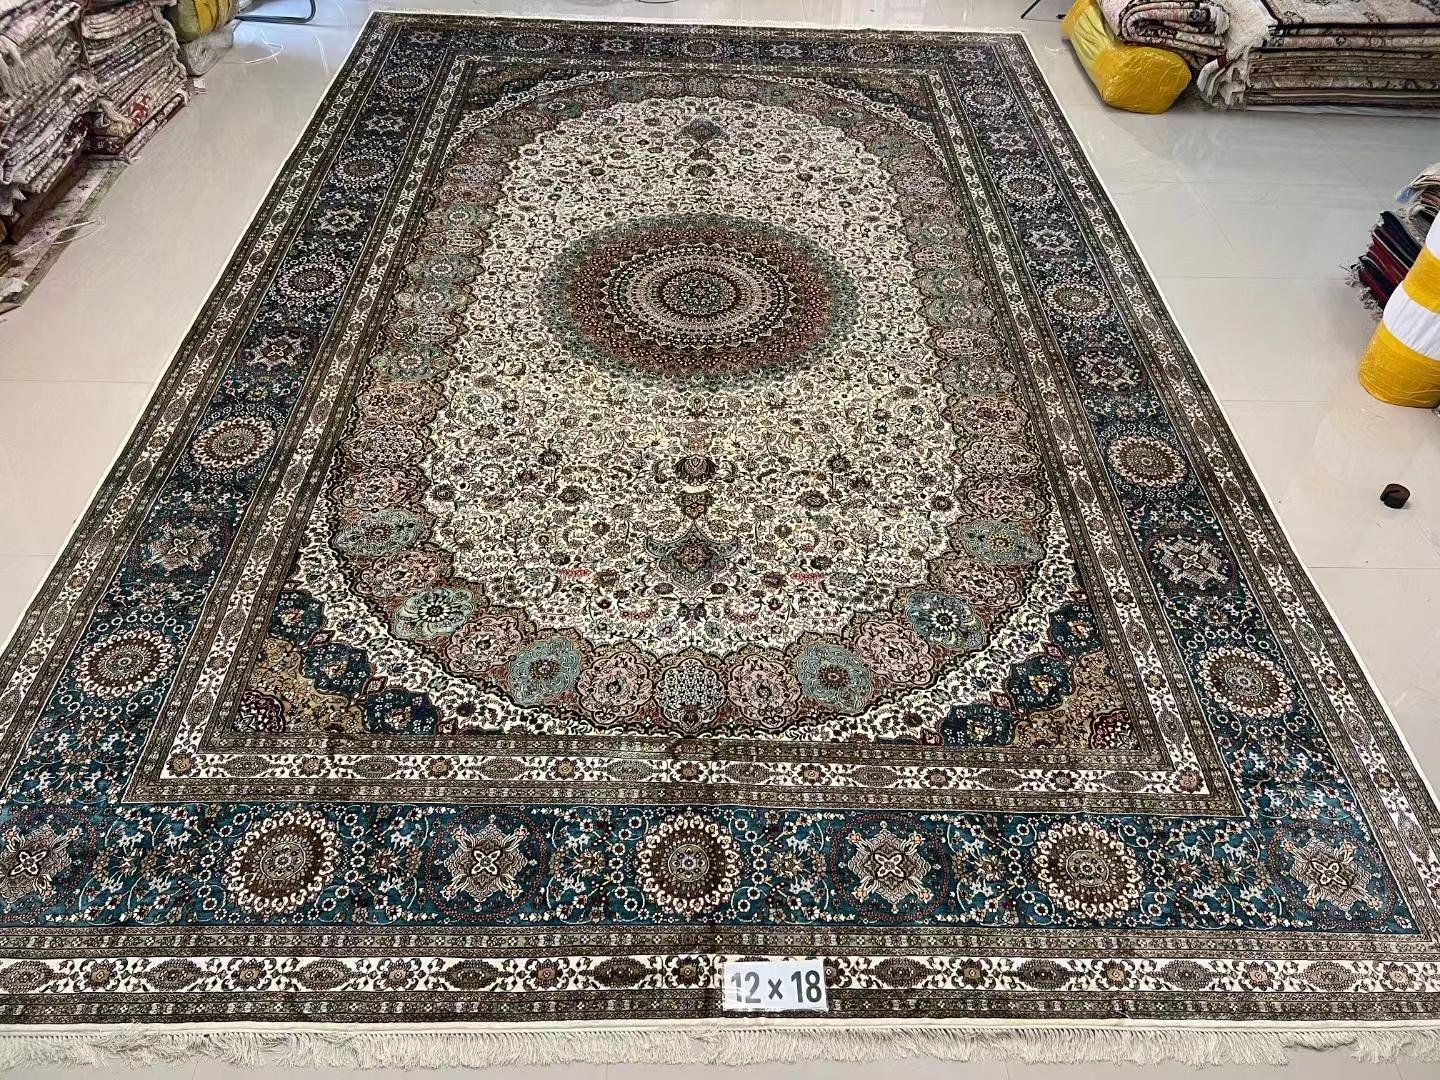 12x18ft large size handmade silk persian style sitting room carpet  2